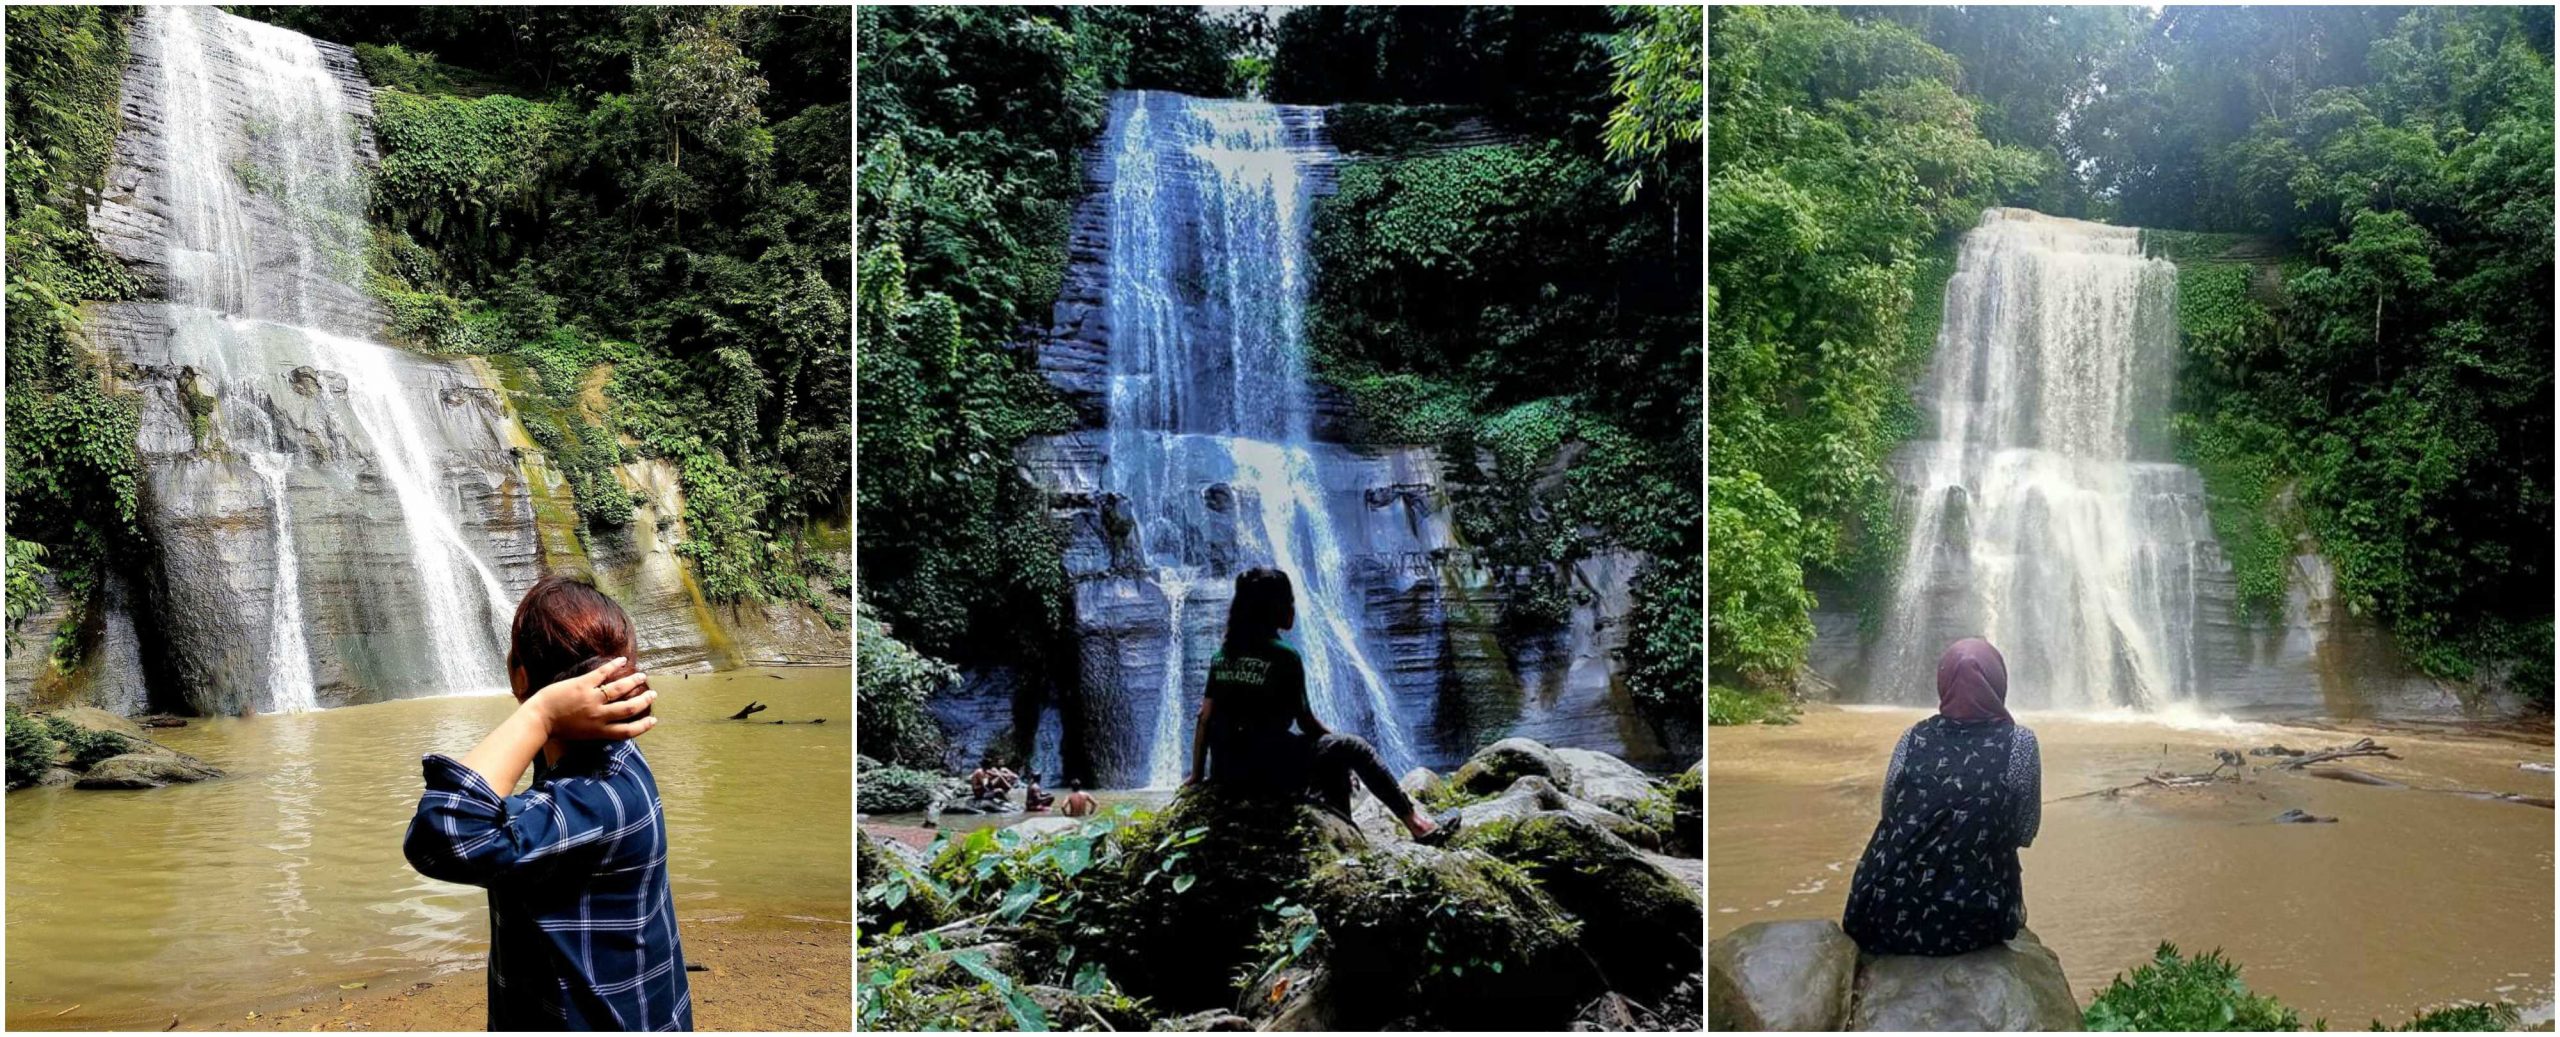 Girls are enjoying the natural beauty of Hum hum Waterfall